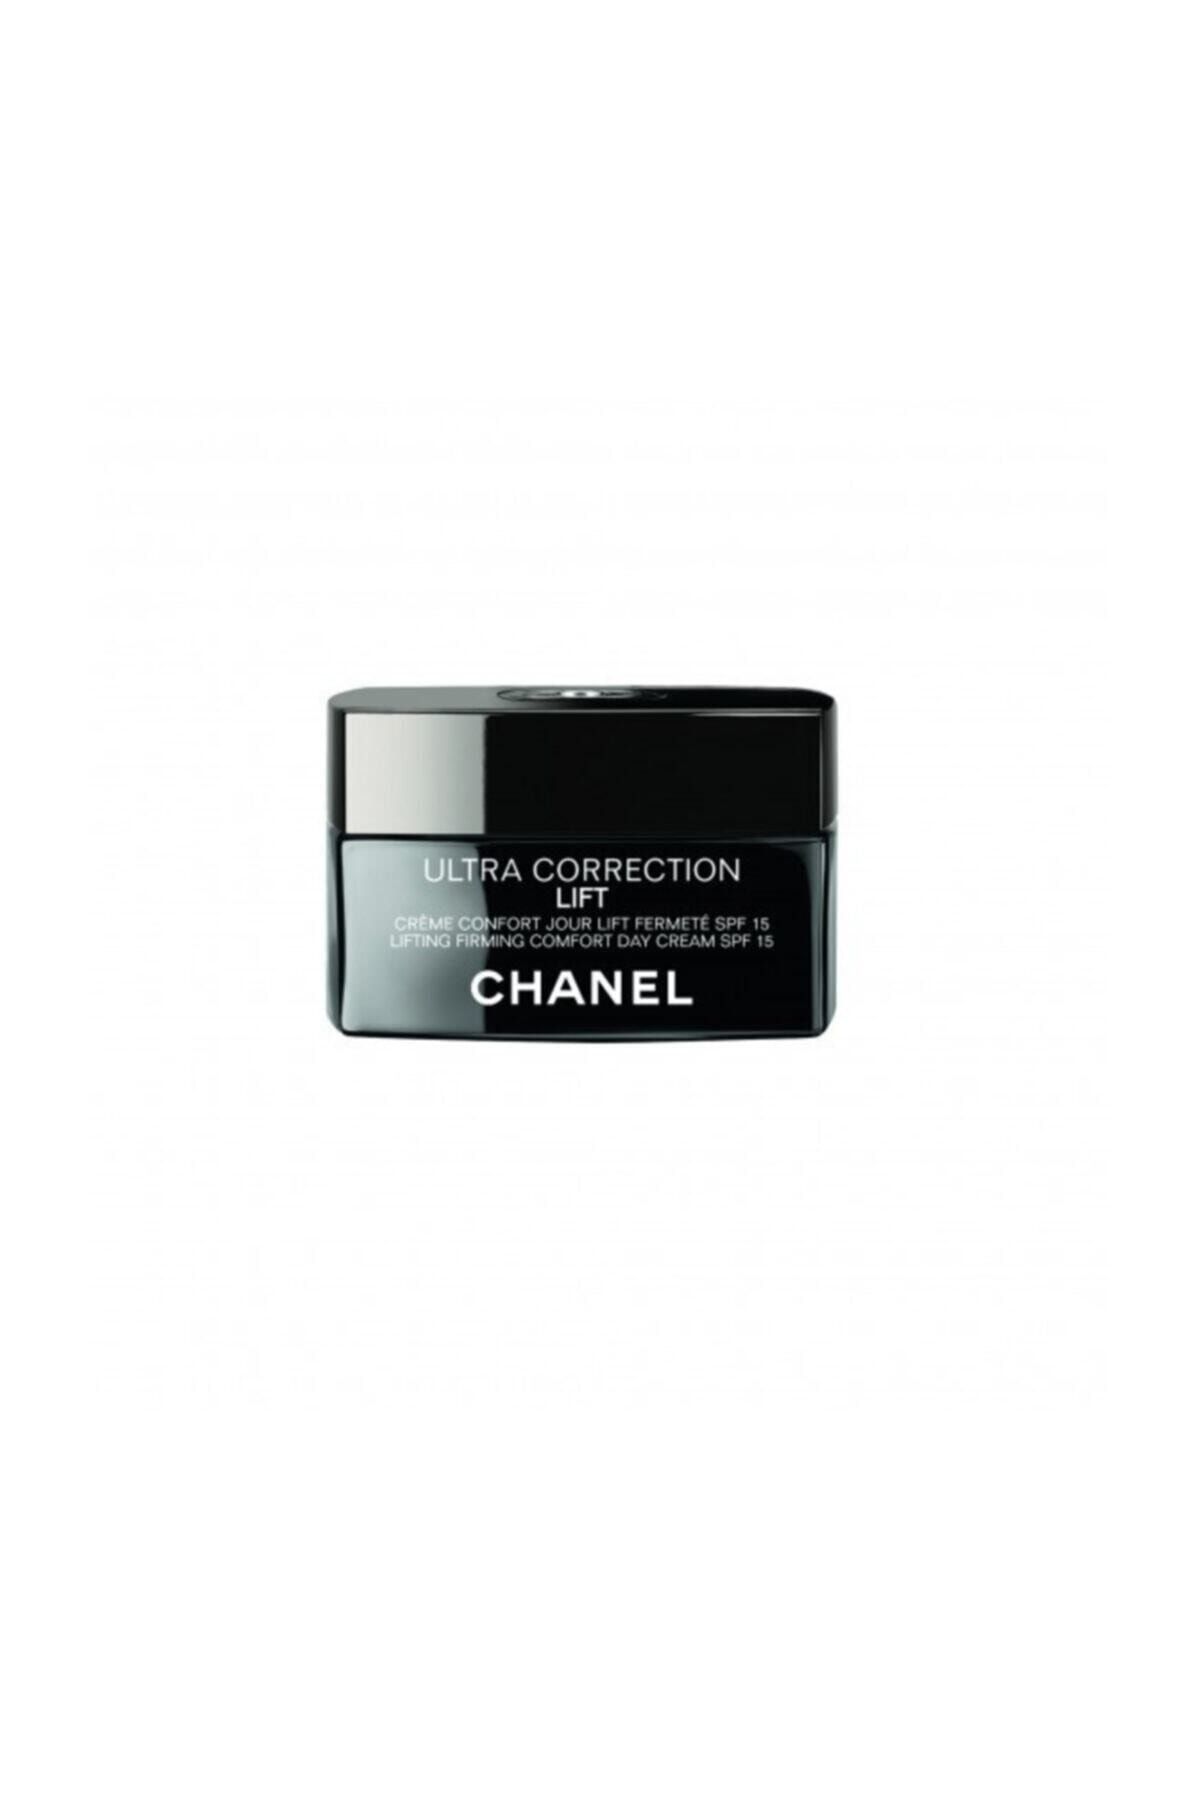 Chanel Ultra Correction Lift Precision Yeux Yaşlanma Karşıtı Spf 15 Gündüz Kremi 50 Ml.